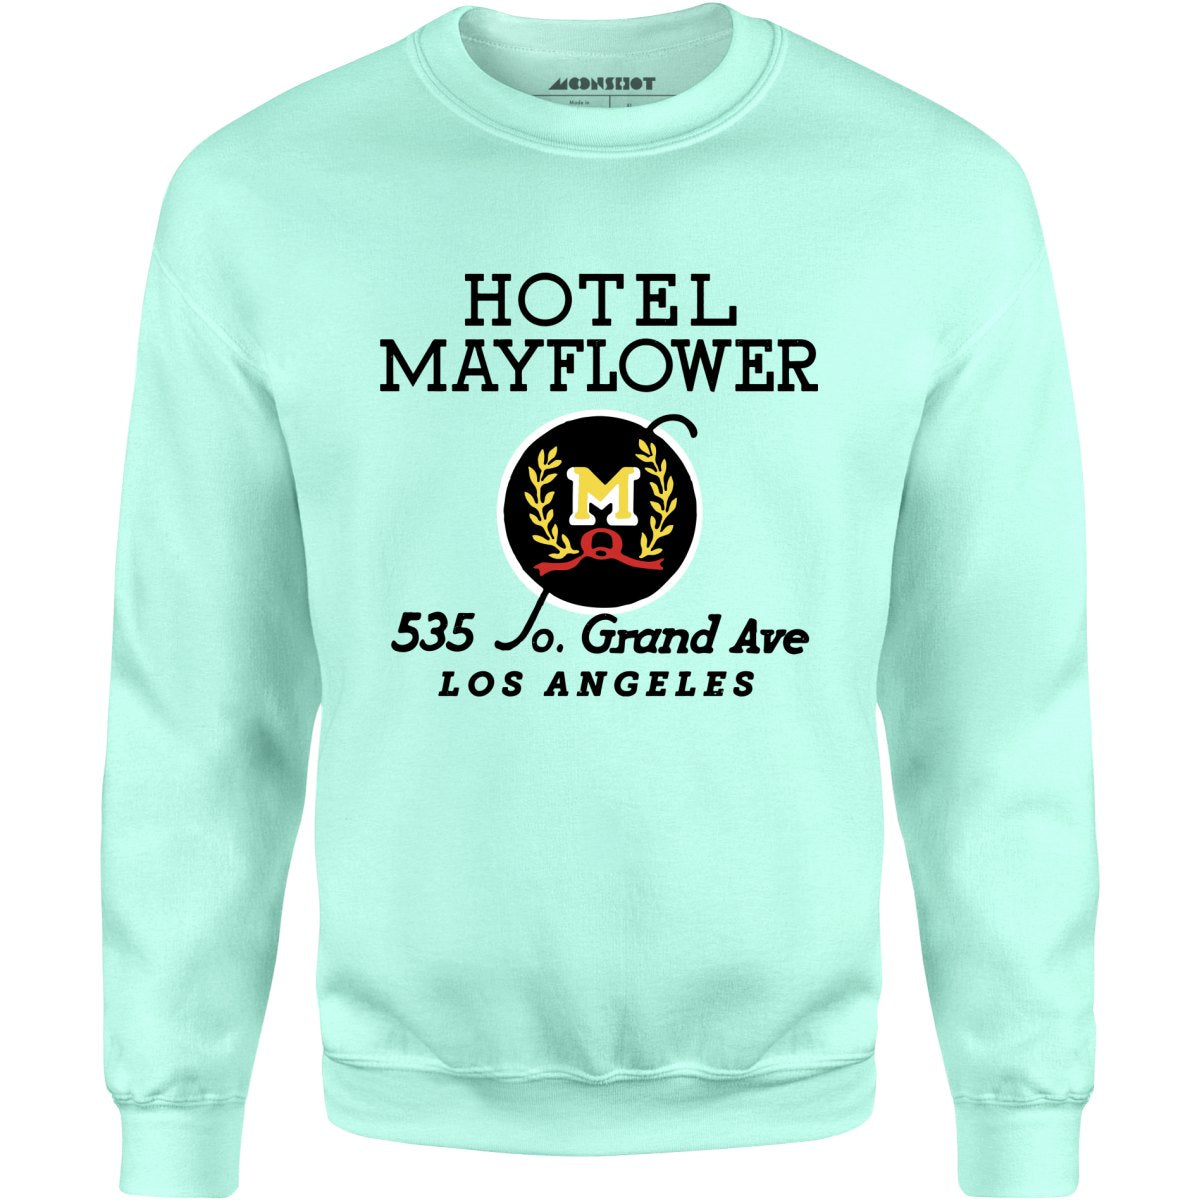 Hotel Mayflower - Los Angeles, CA - Vintage Hotel - Unisex Sweatshirt